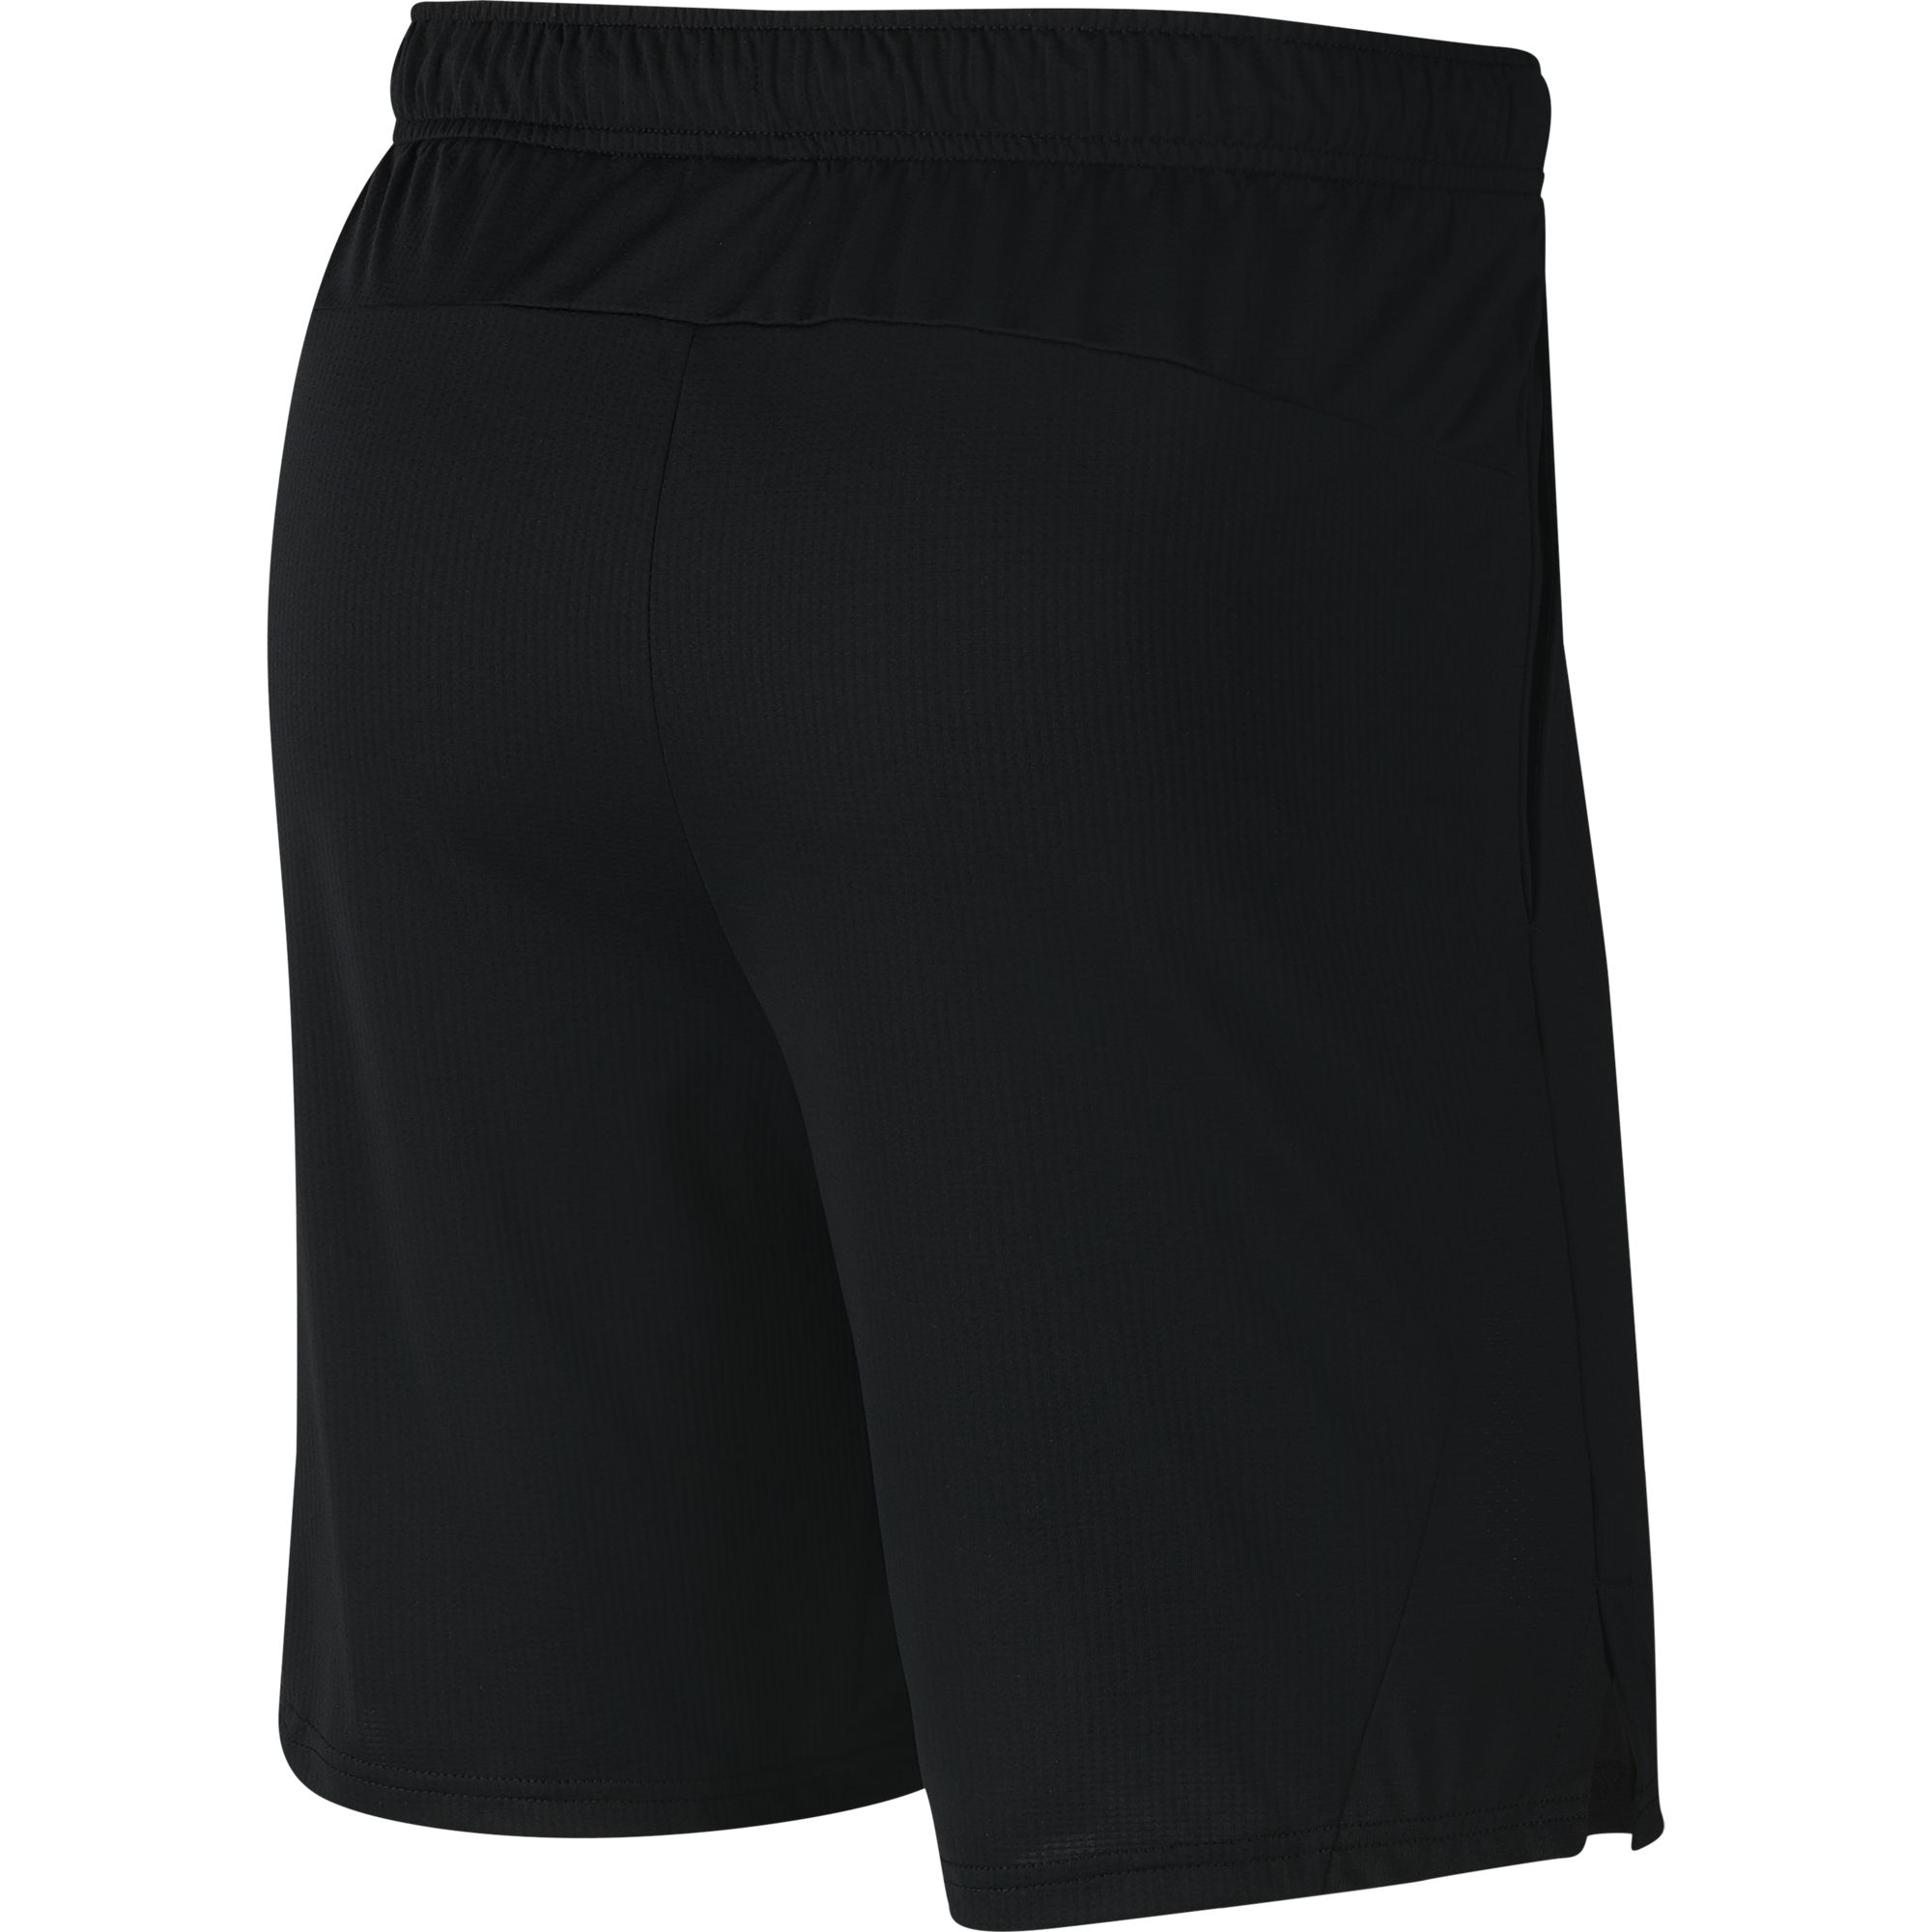 Men's Dri-Fit Training Shorts